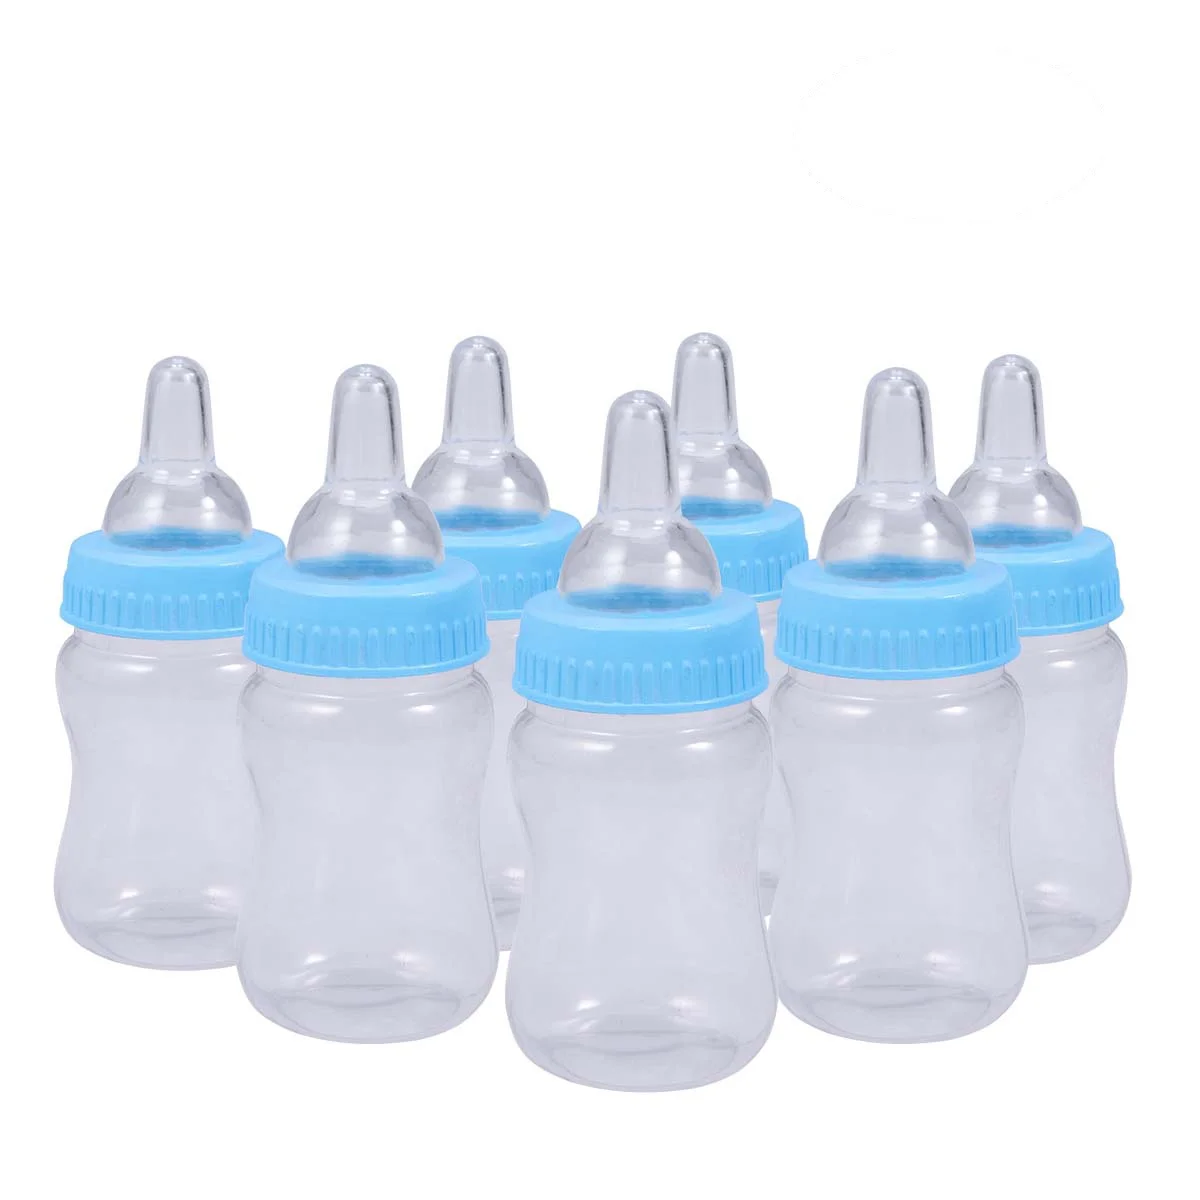 Купи Bottle Baby Box Candy Shower Gift Mini Bottles Cute Partyblue Fillable Feeding Style Feeder Boysupplies Favor за 321 рублей в магазине AliExpress